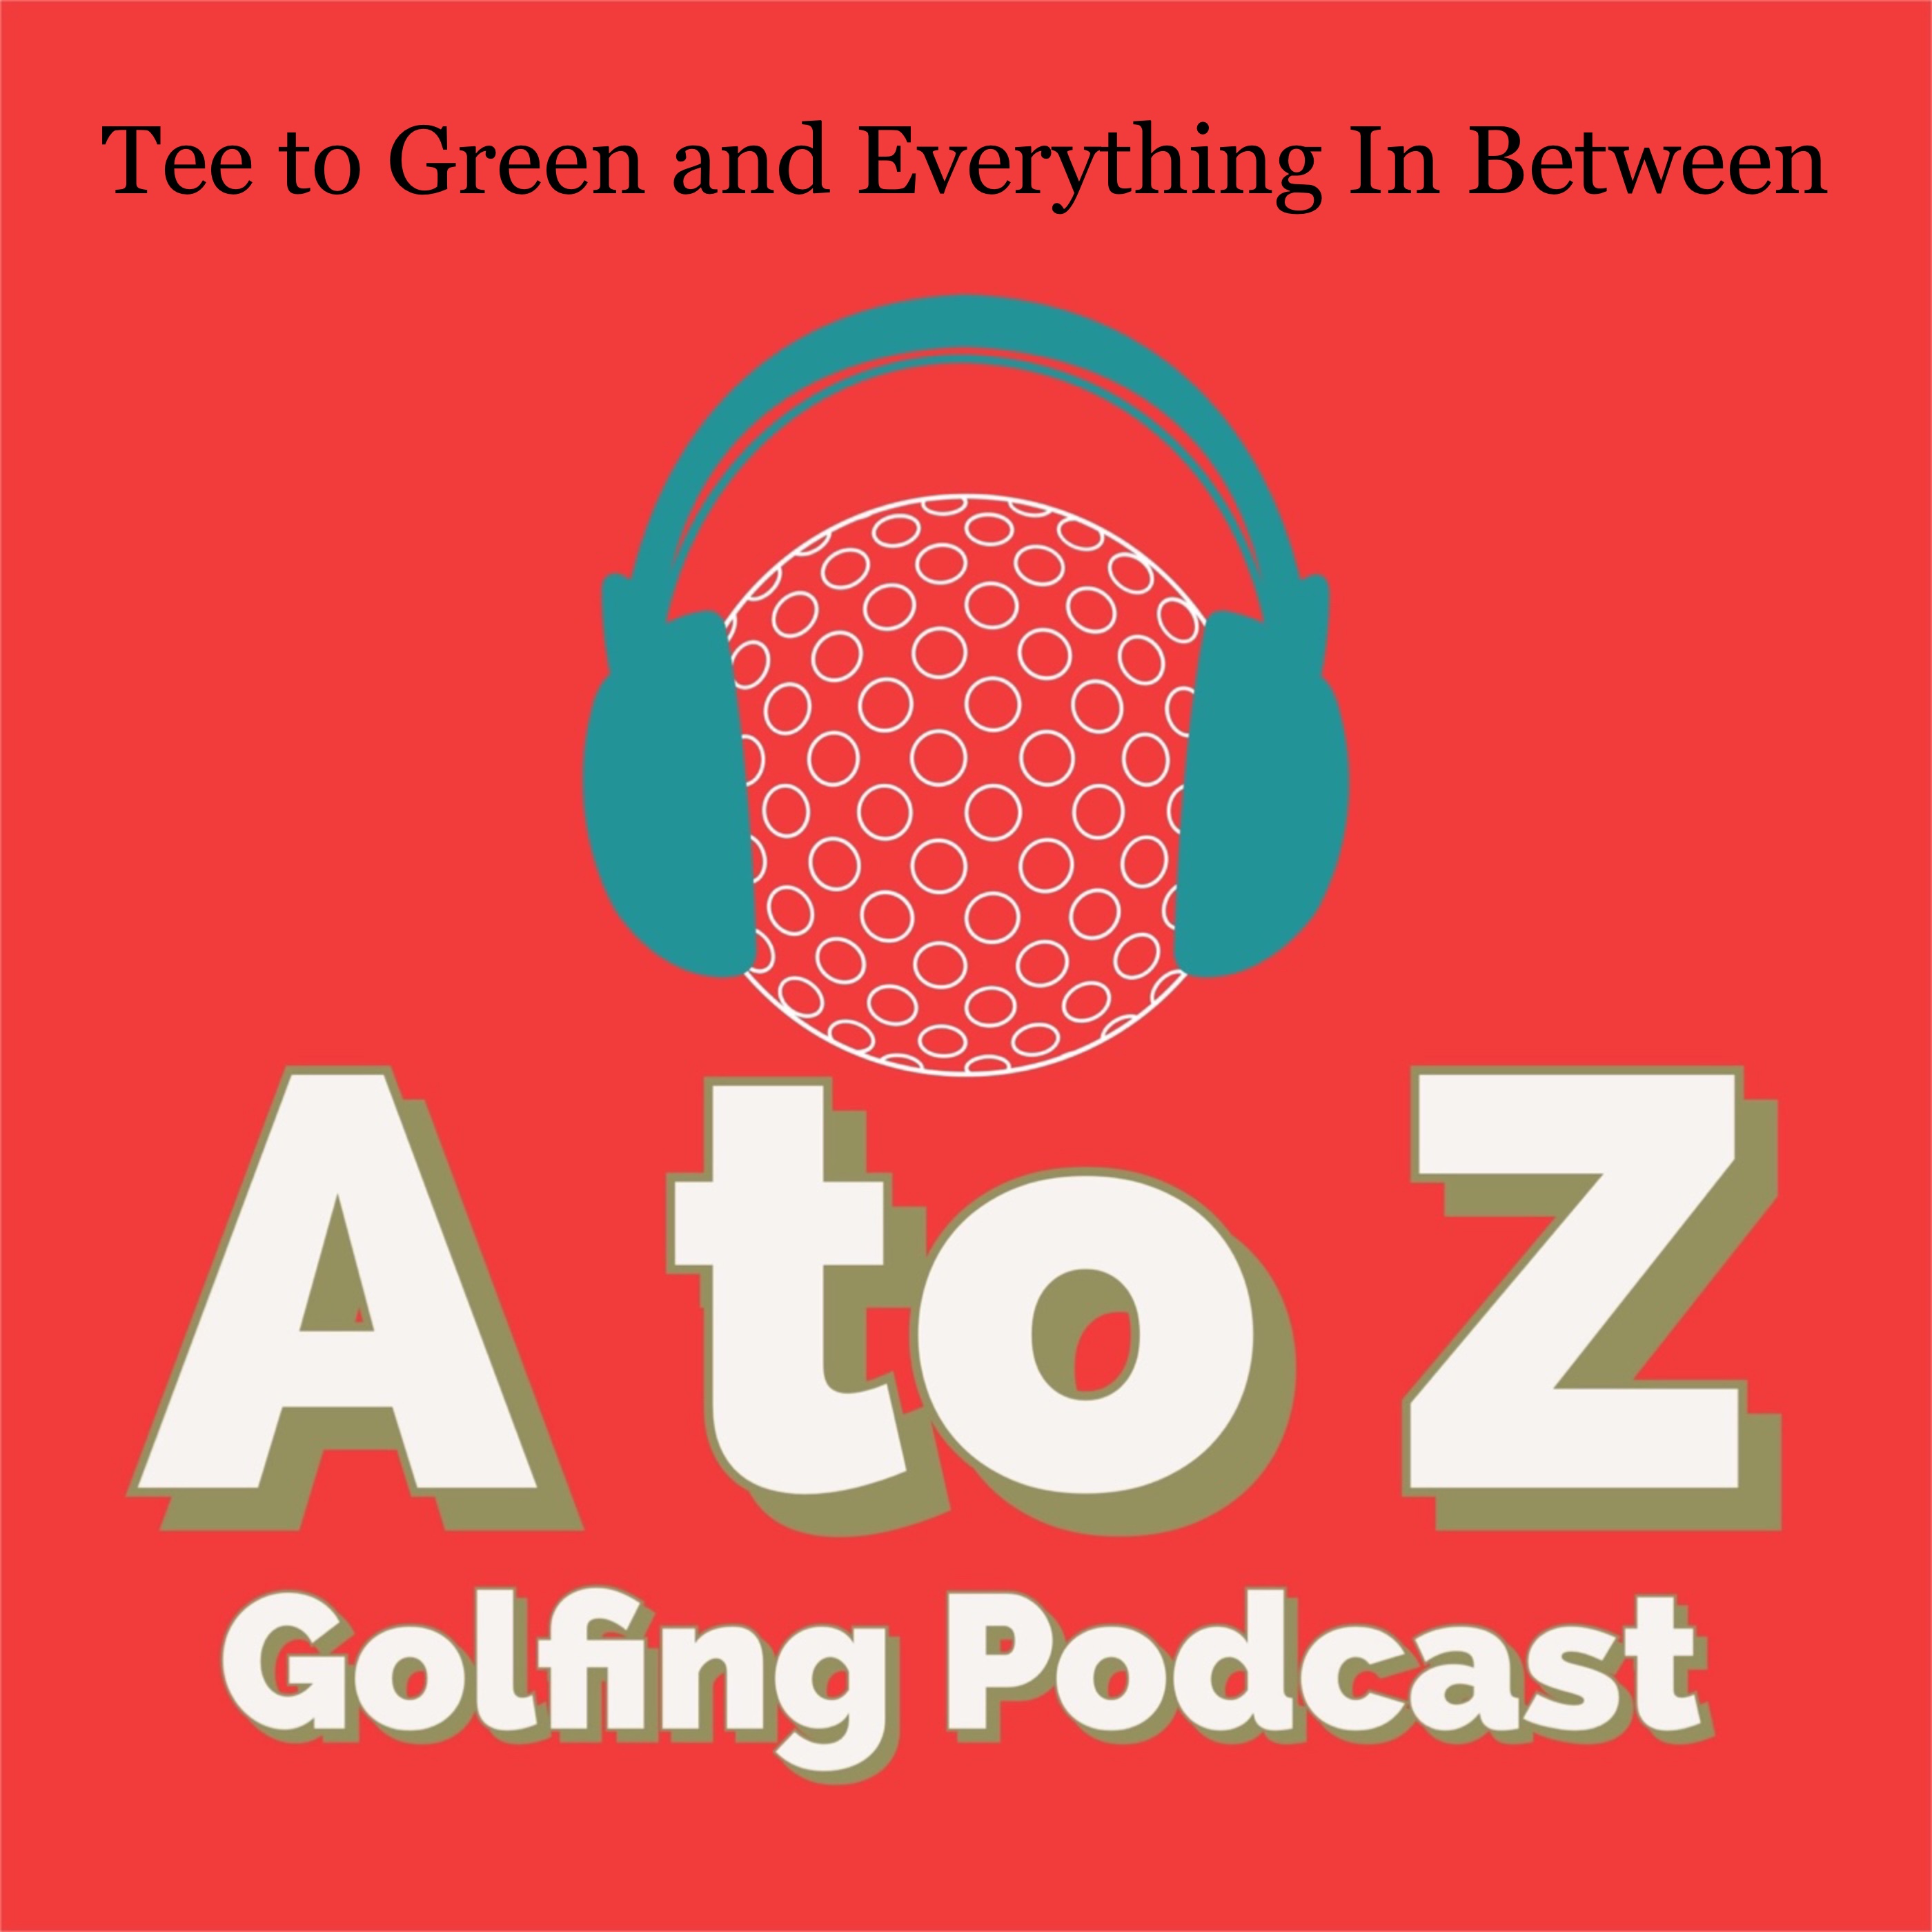 A to Z Golfing Podcast